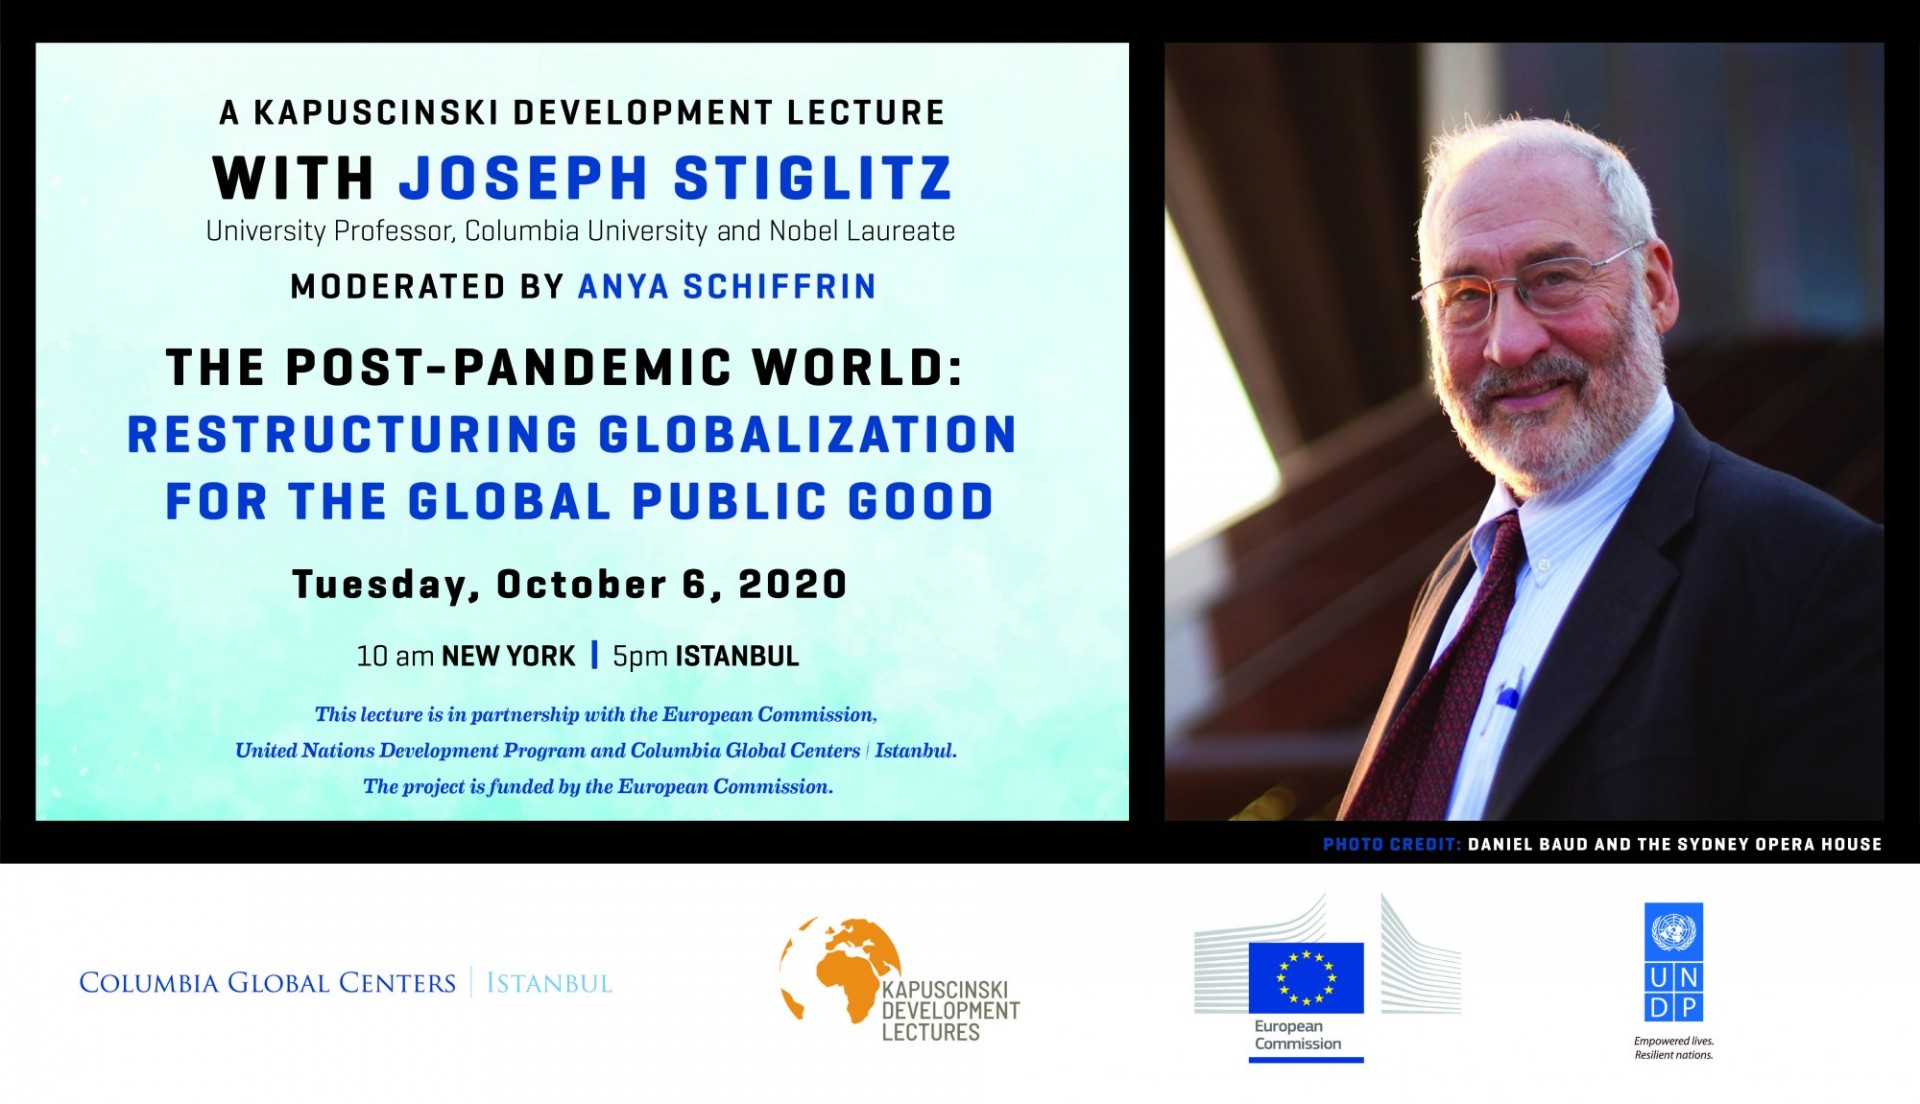 A Kapuscinski Development Lecture with Joseph Stiglitz